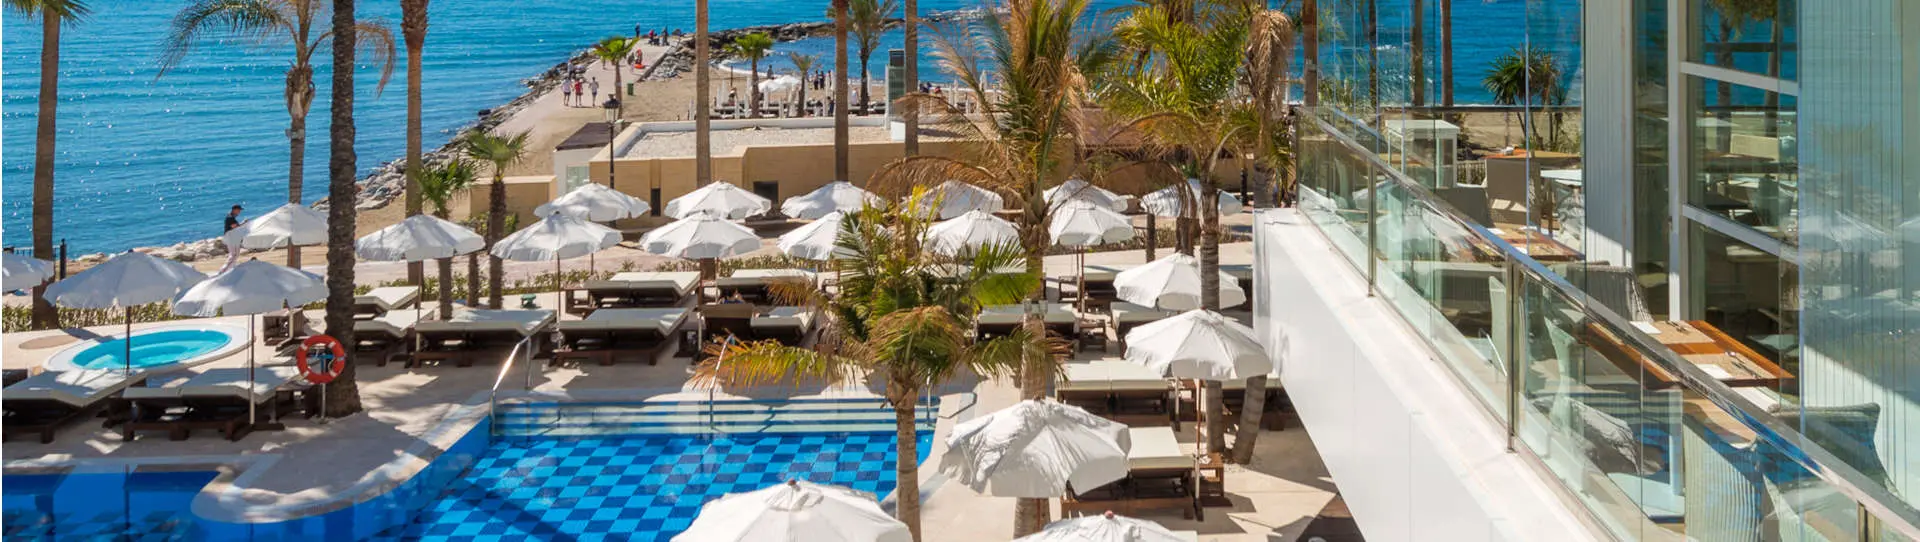 Spain golf holidays - Amàre Marbella Beach Hotel - Photo 2